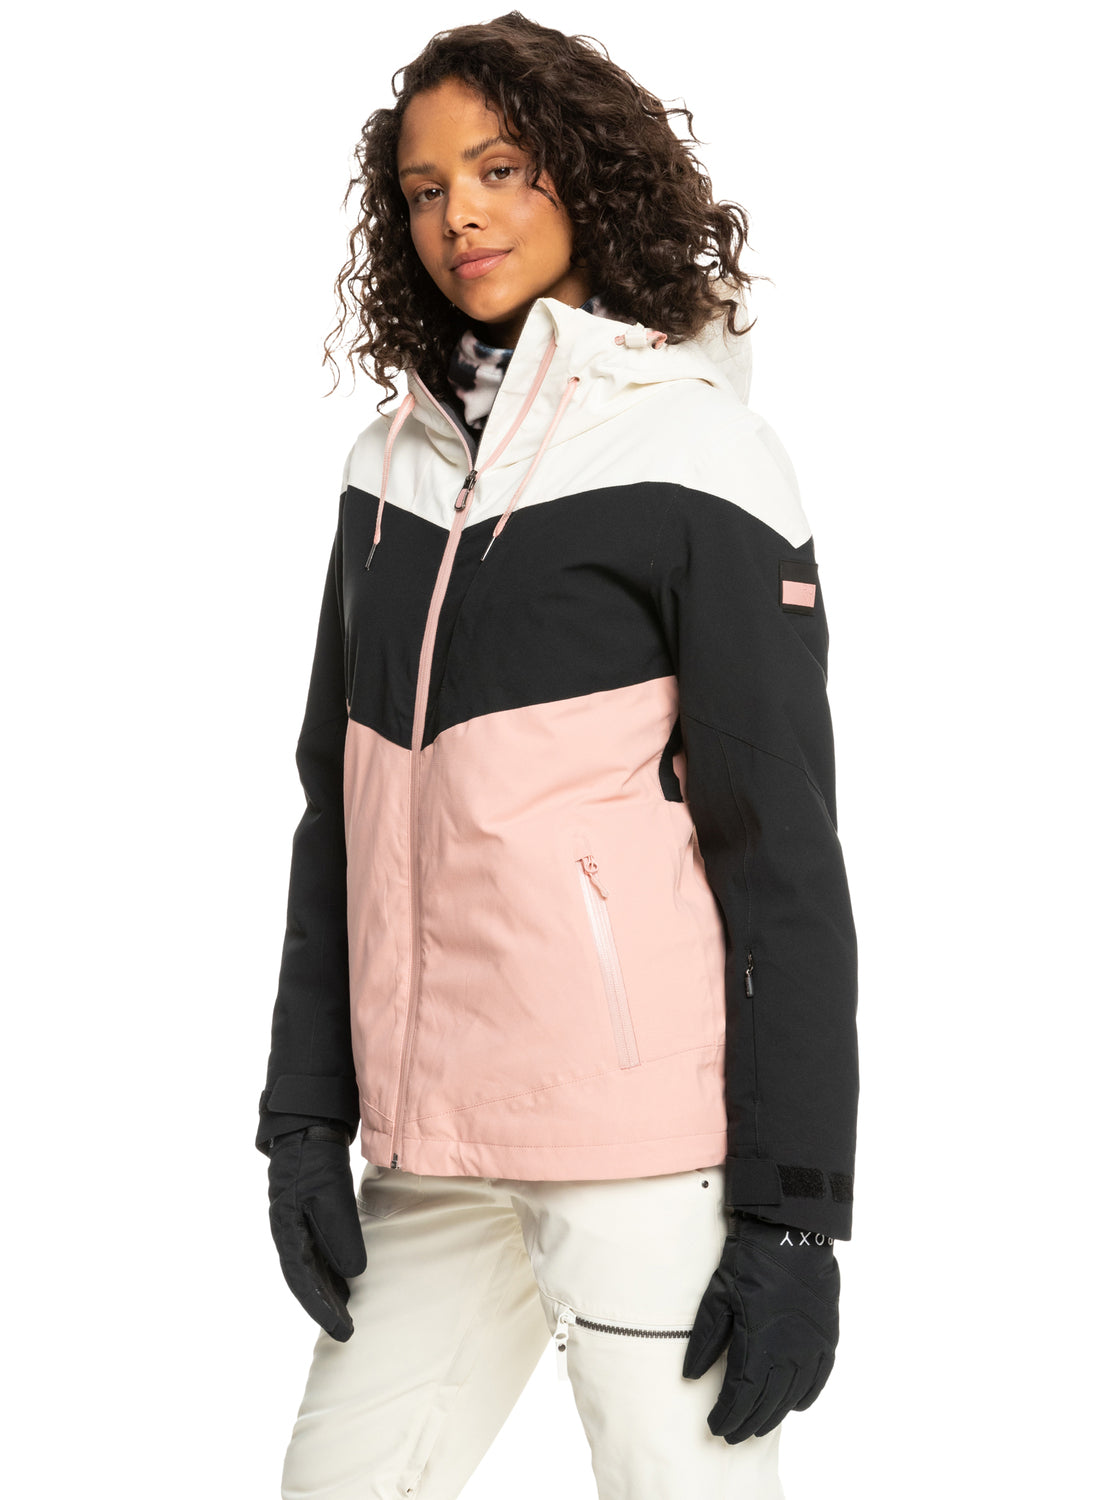 fabriek Zeemeeuw Pilfer Roxy Winter Haven Insulated Snow Jacket - Women's – Arlberg Ski & Surf